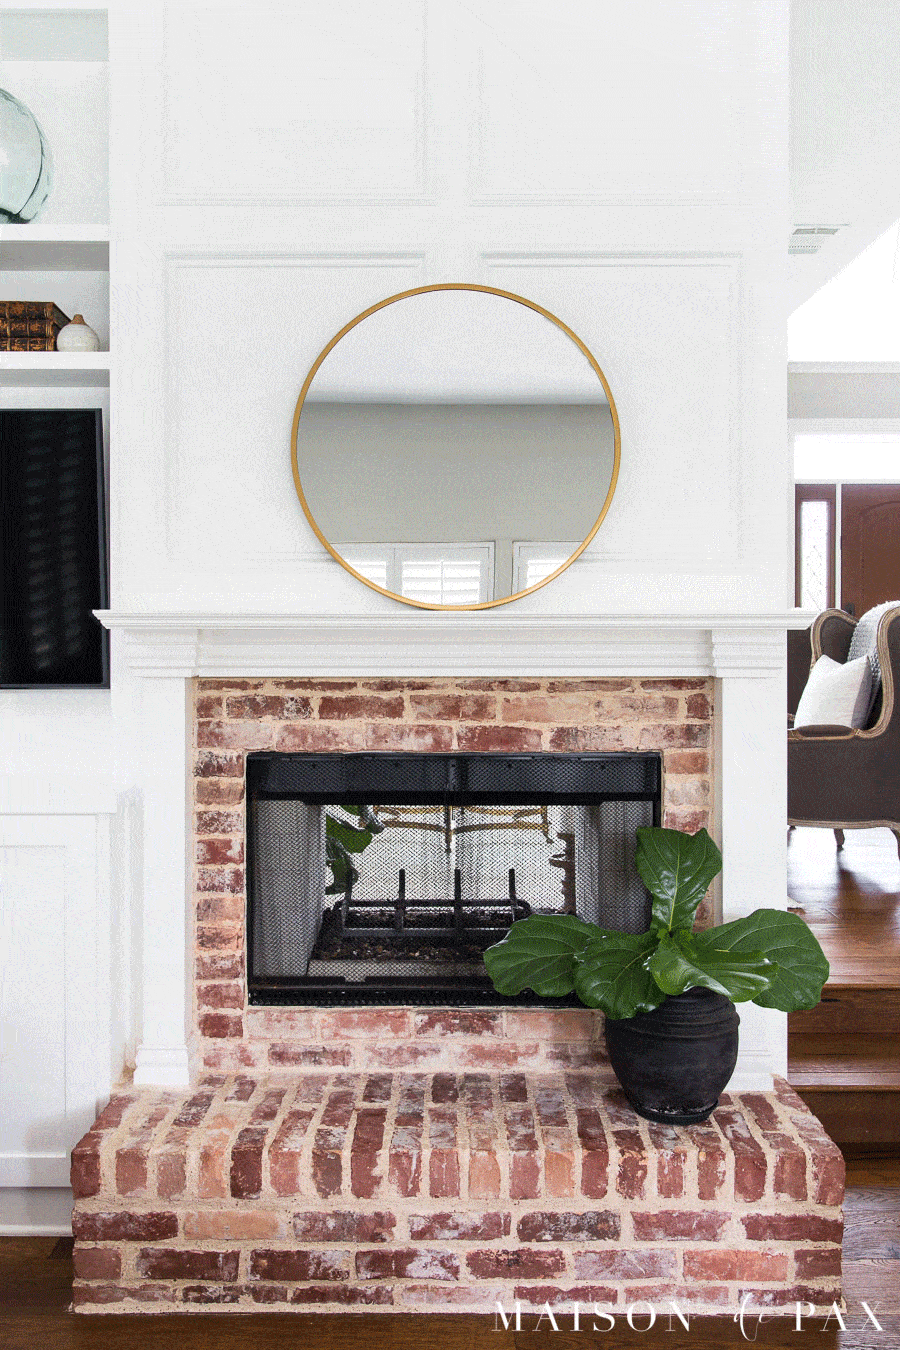 5 Simple Mantel Decor Ideas Maison De Pax, Simple Fireplace Mantel Decorating Ideas